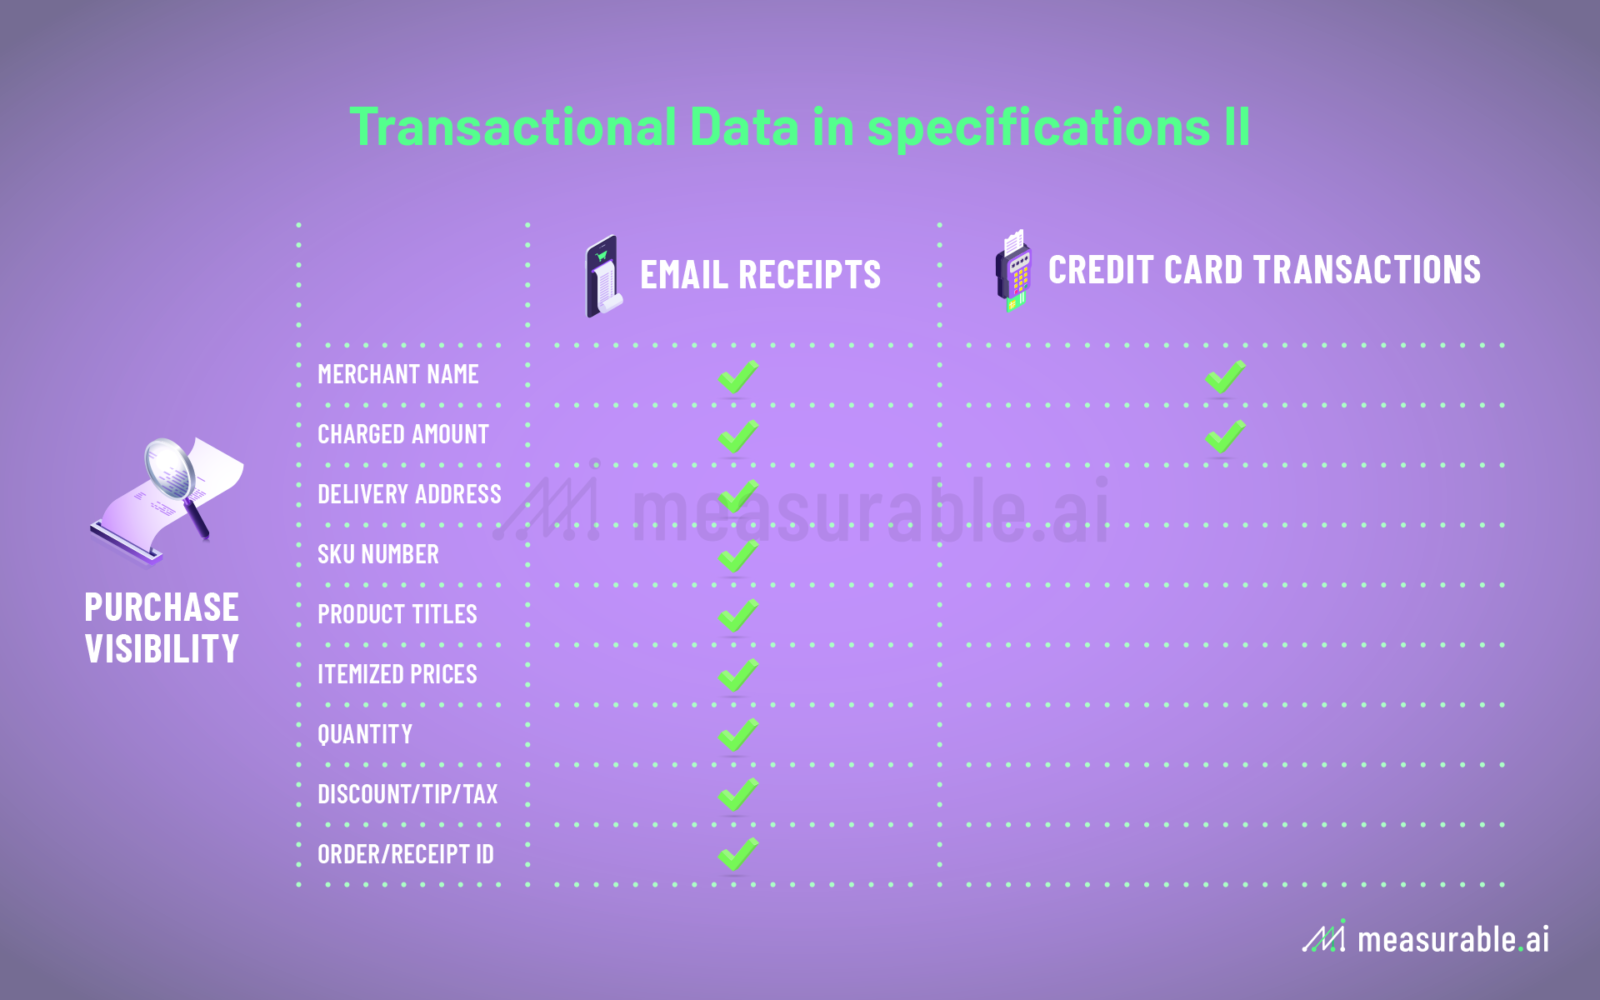 E-receipt data vs Credit card data